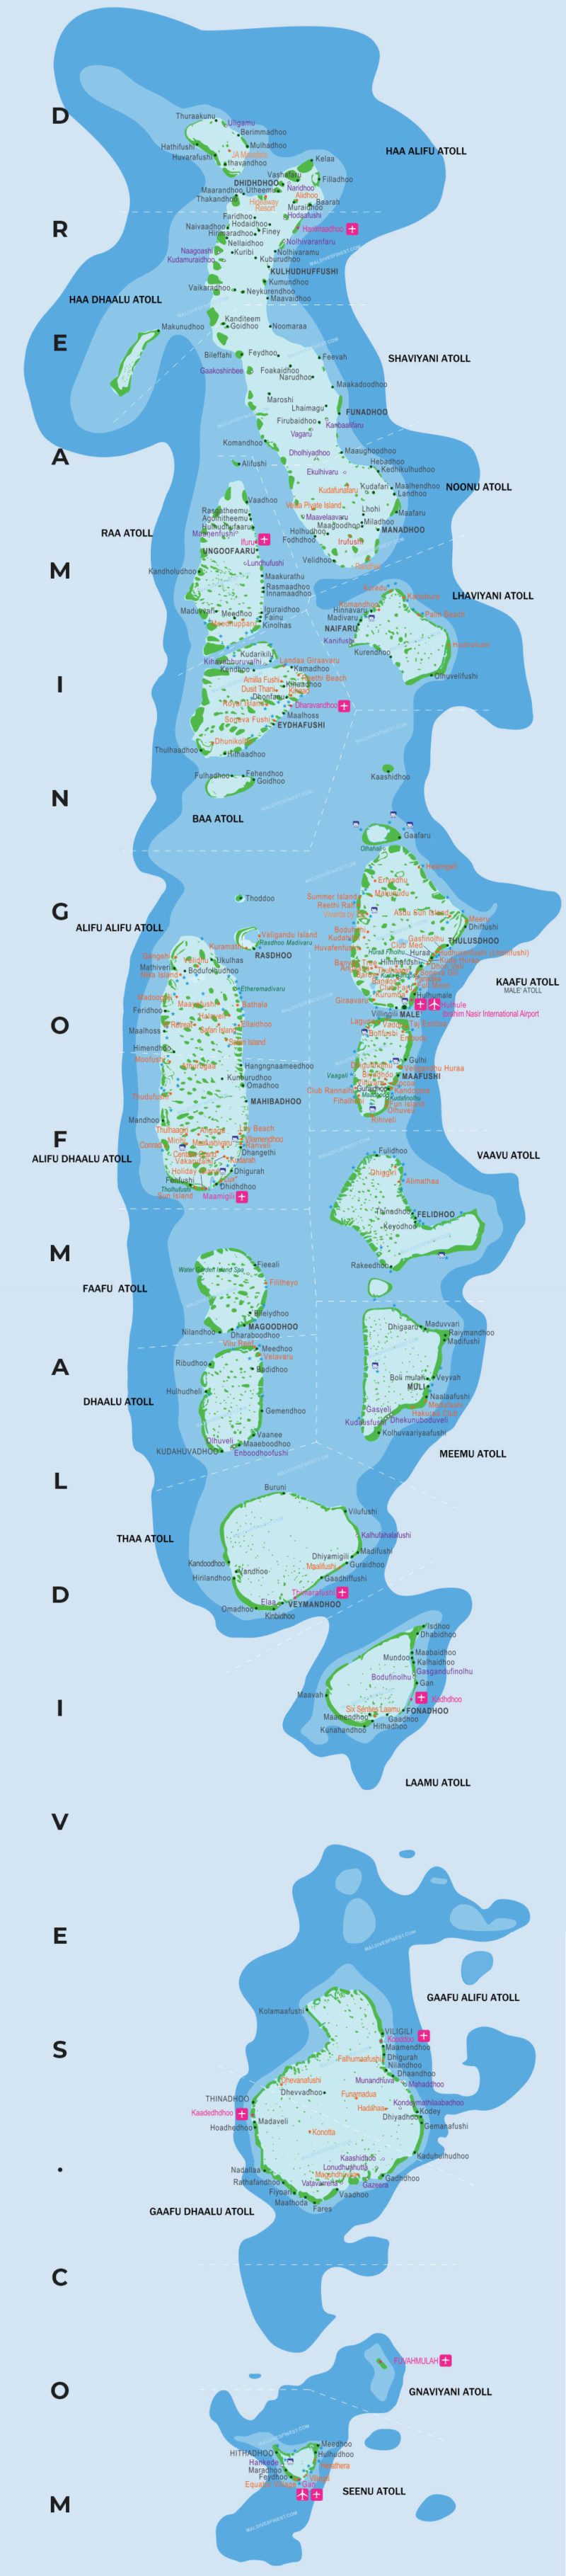 maldives tourism map